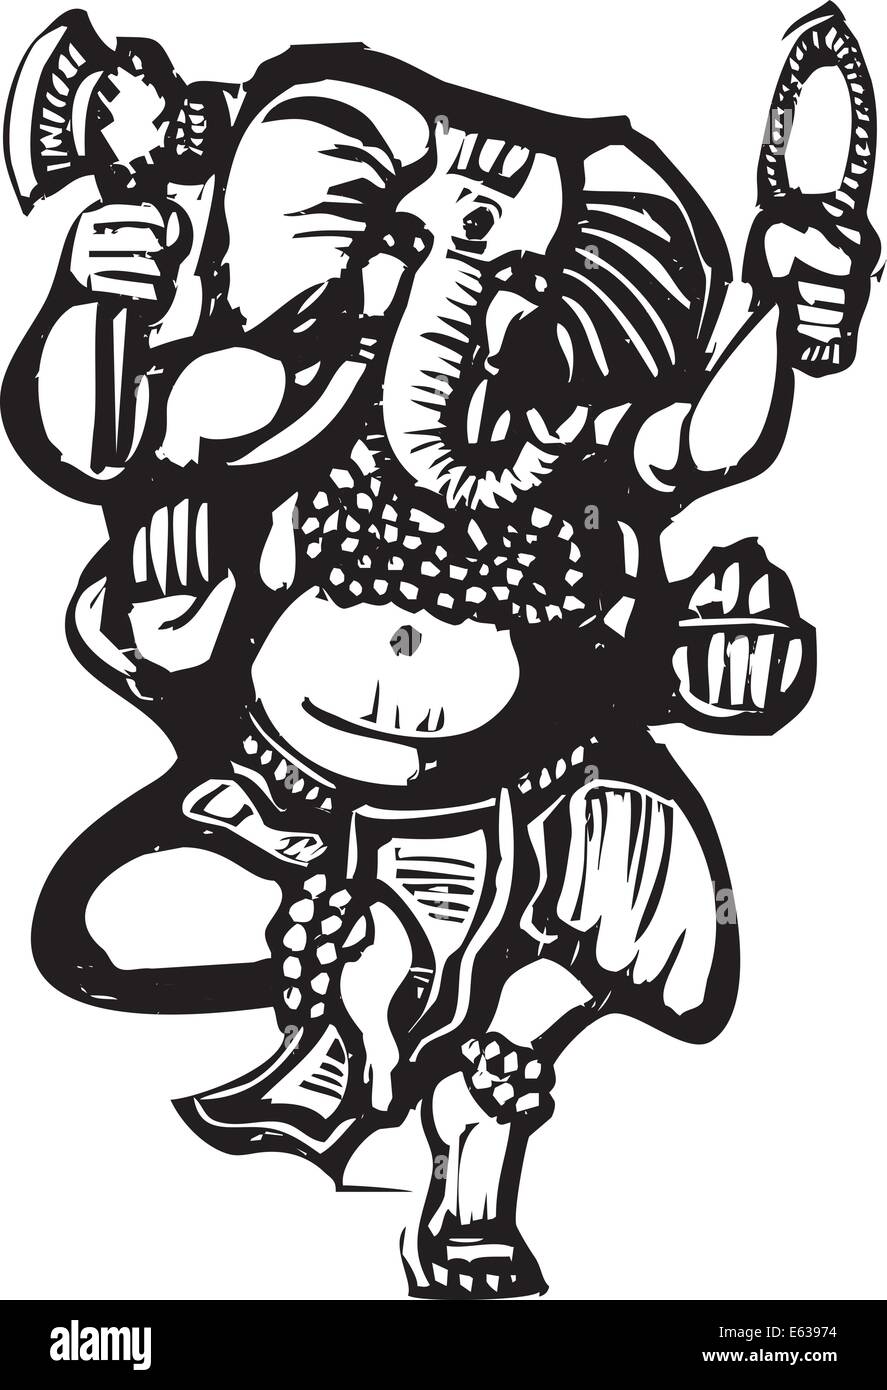 Woodcut style image of the Hindu God Ganesha Stock Vector Image & Art ...